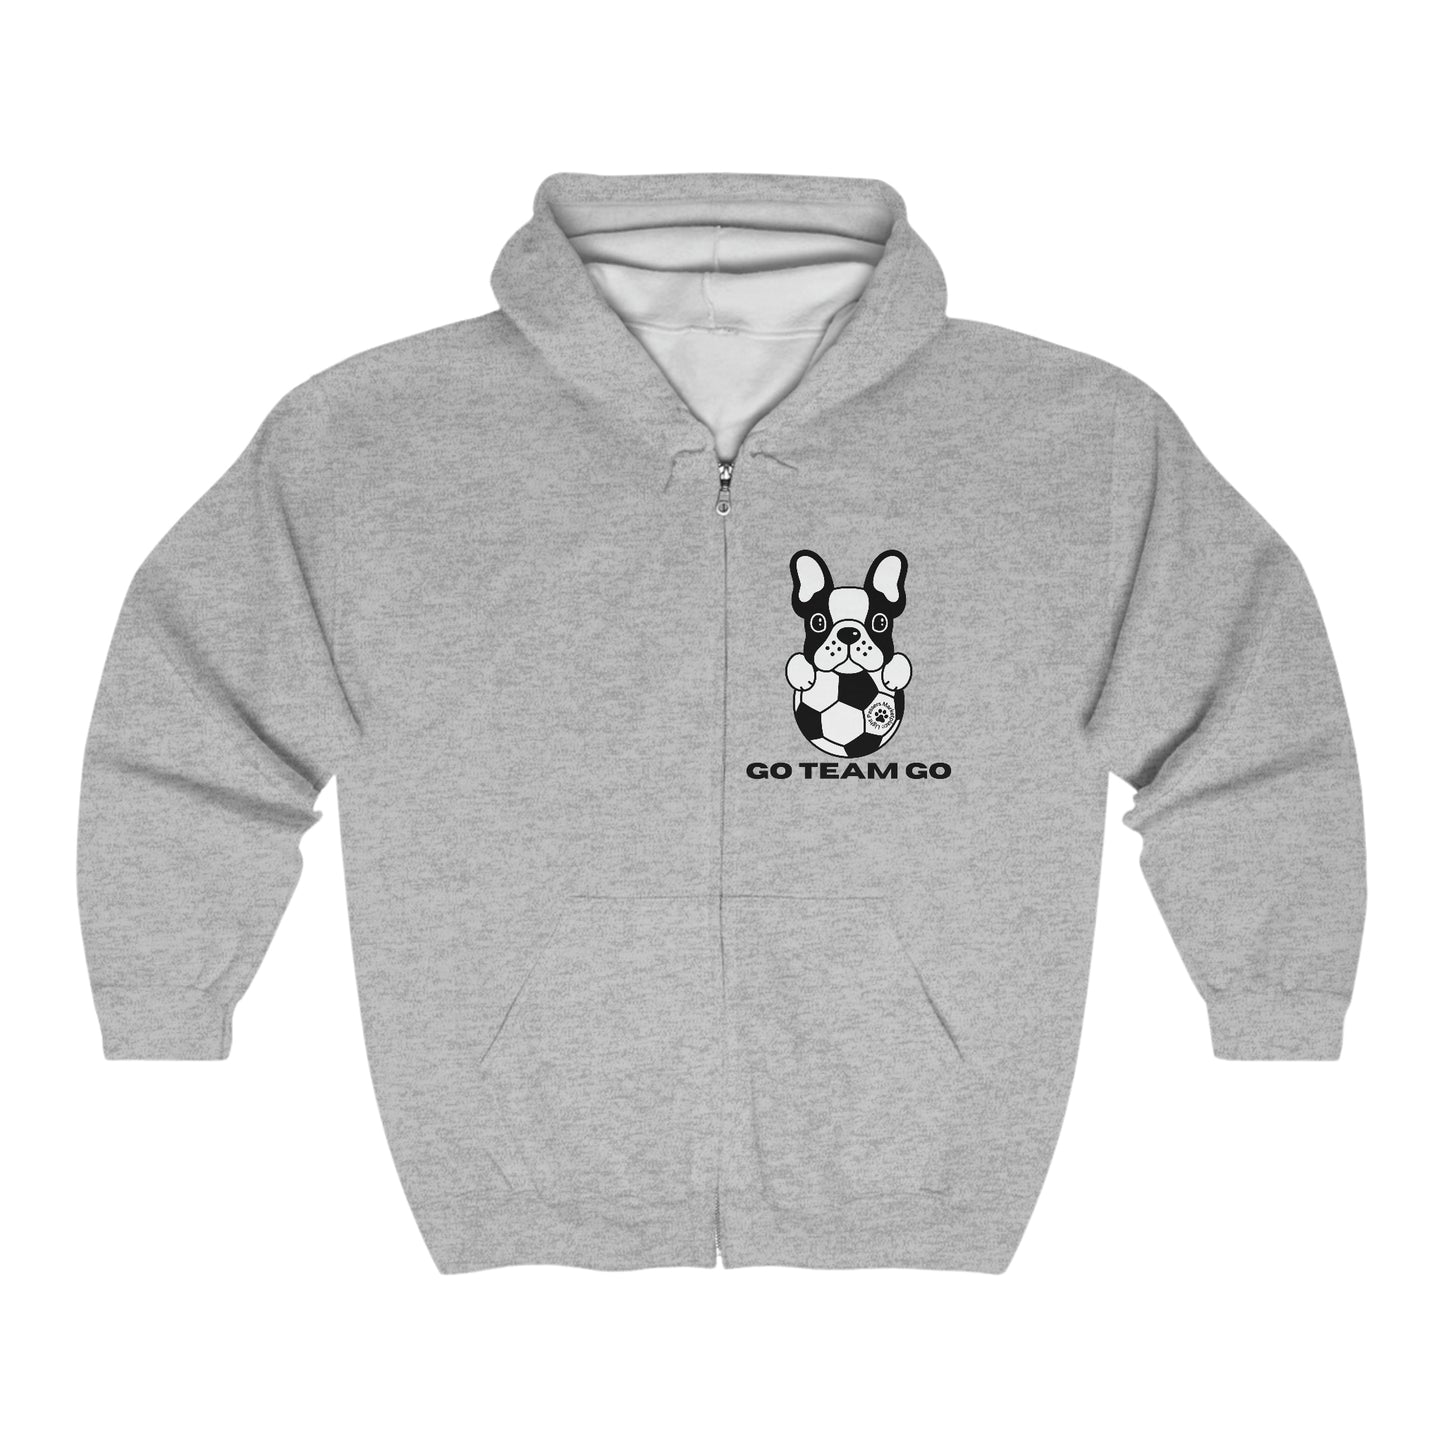 Light Passers Marketplace Soccer Dog Unisex Full Zip Hooded Sweatshirt, Fitness, Mental Health, Simple Messages